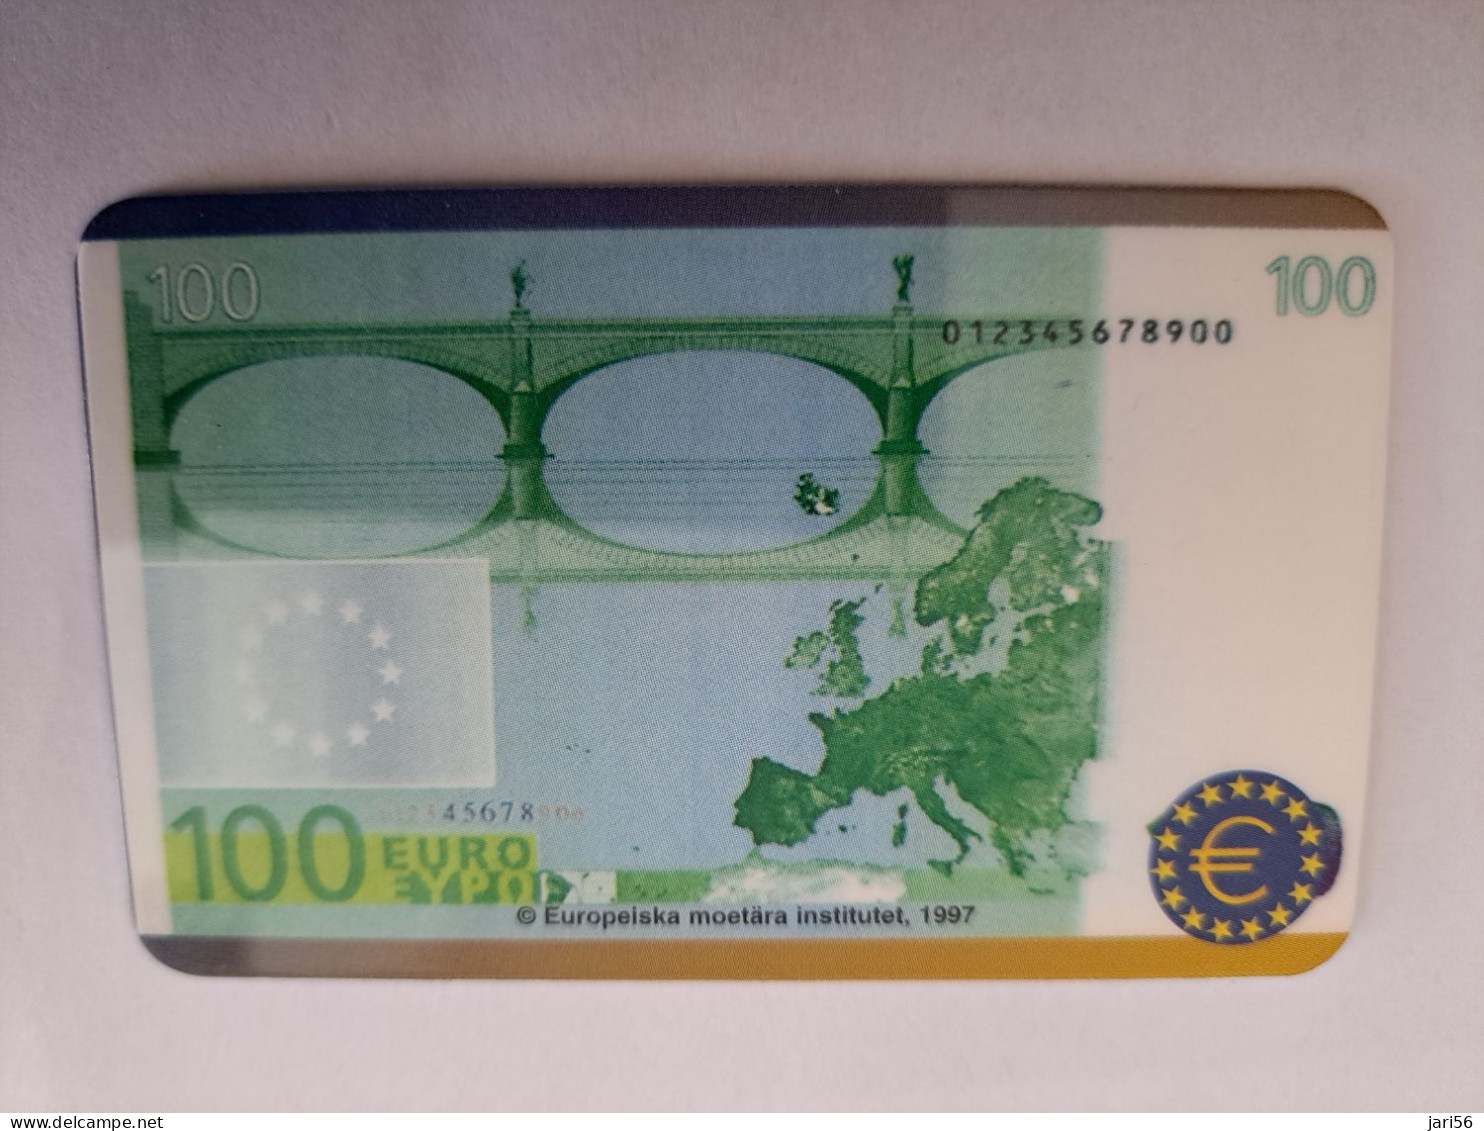 GREAT BRITAIN   20 UNITS   / EURO COINS/ BILJET 100 EURO    (date 09/ 98)  PREPAID CARD / MINT      **13308** - Verzamelingen